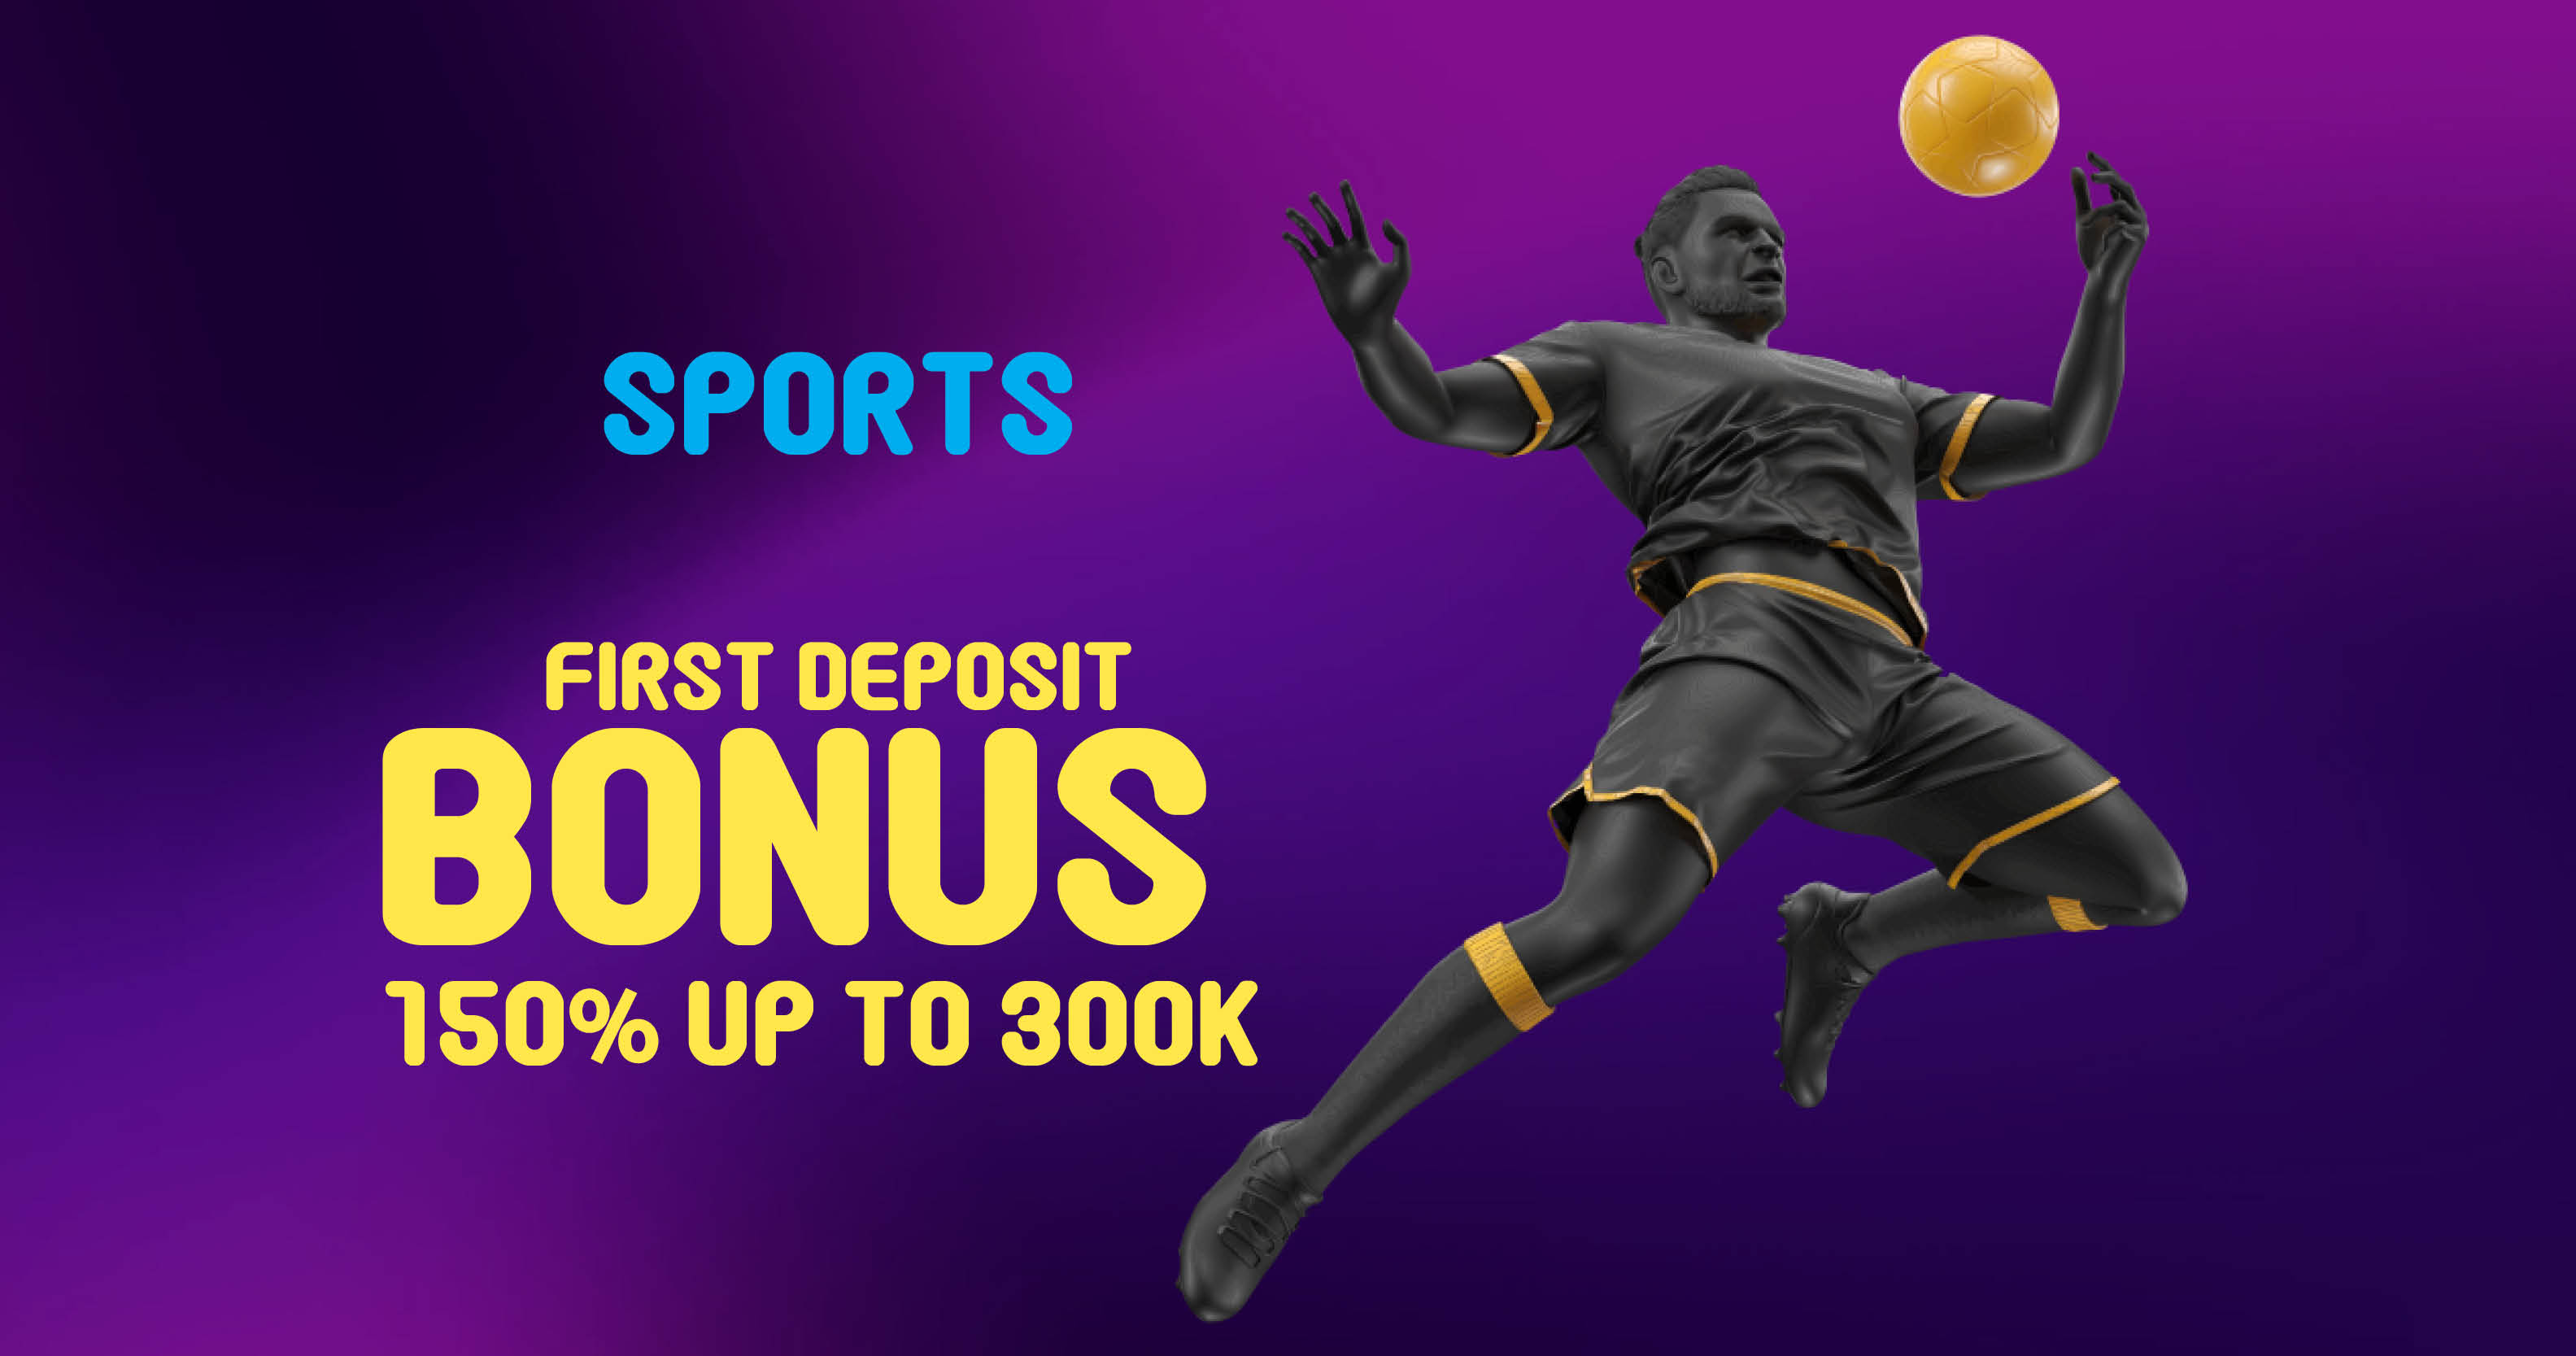 1st Deposit Bonus - Sports